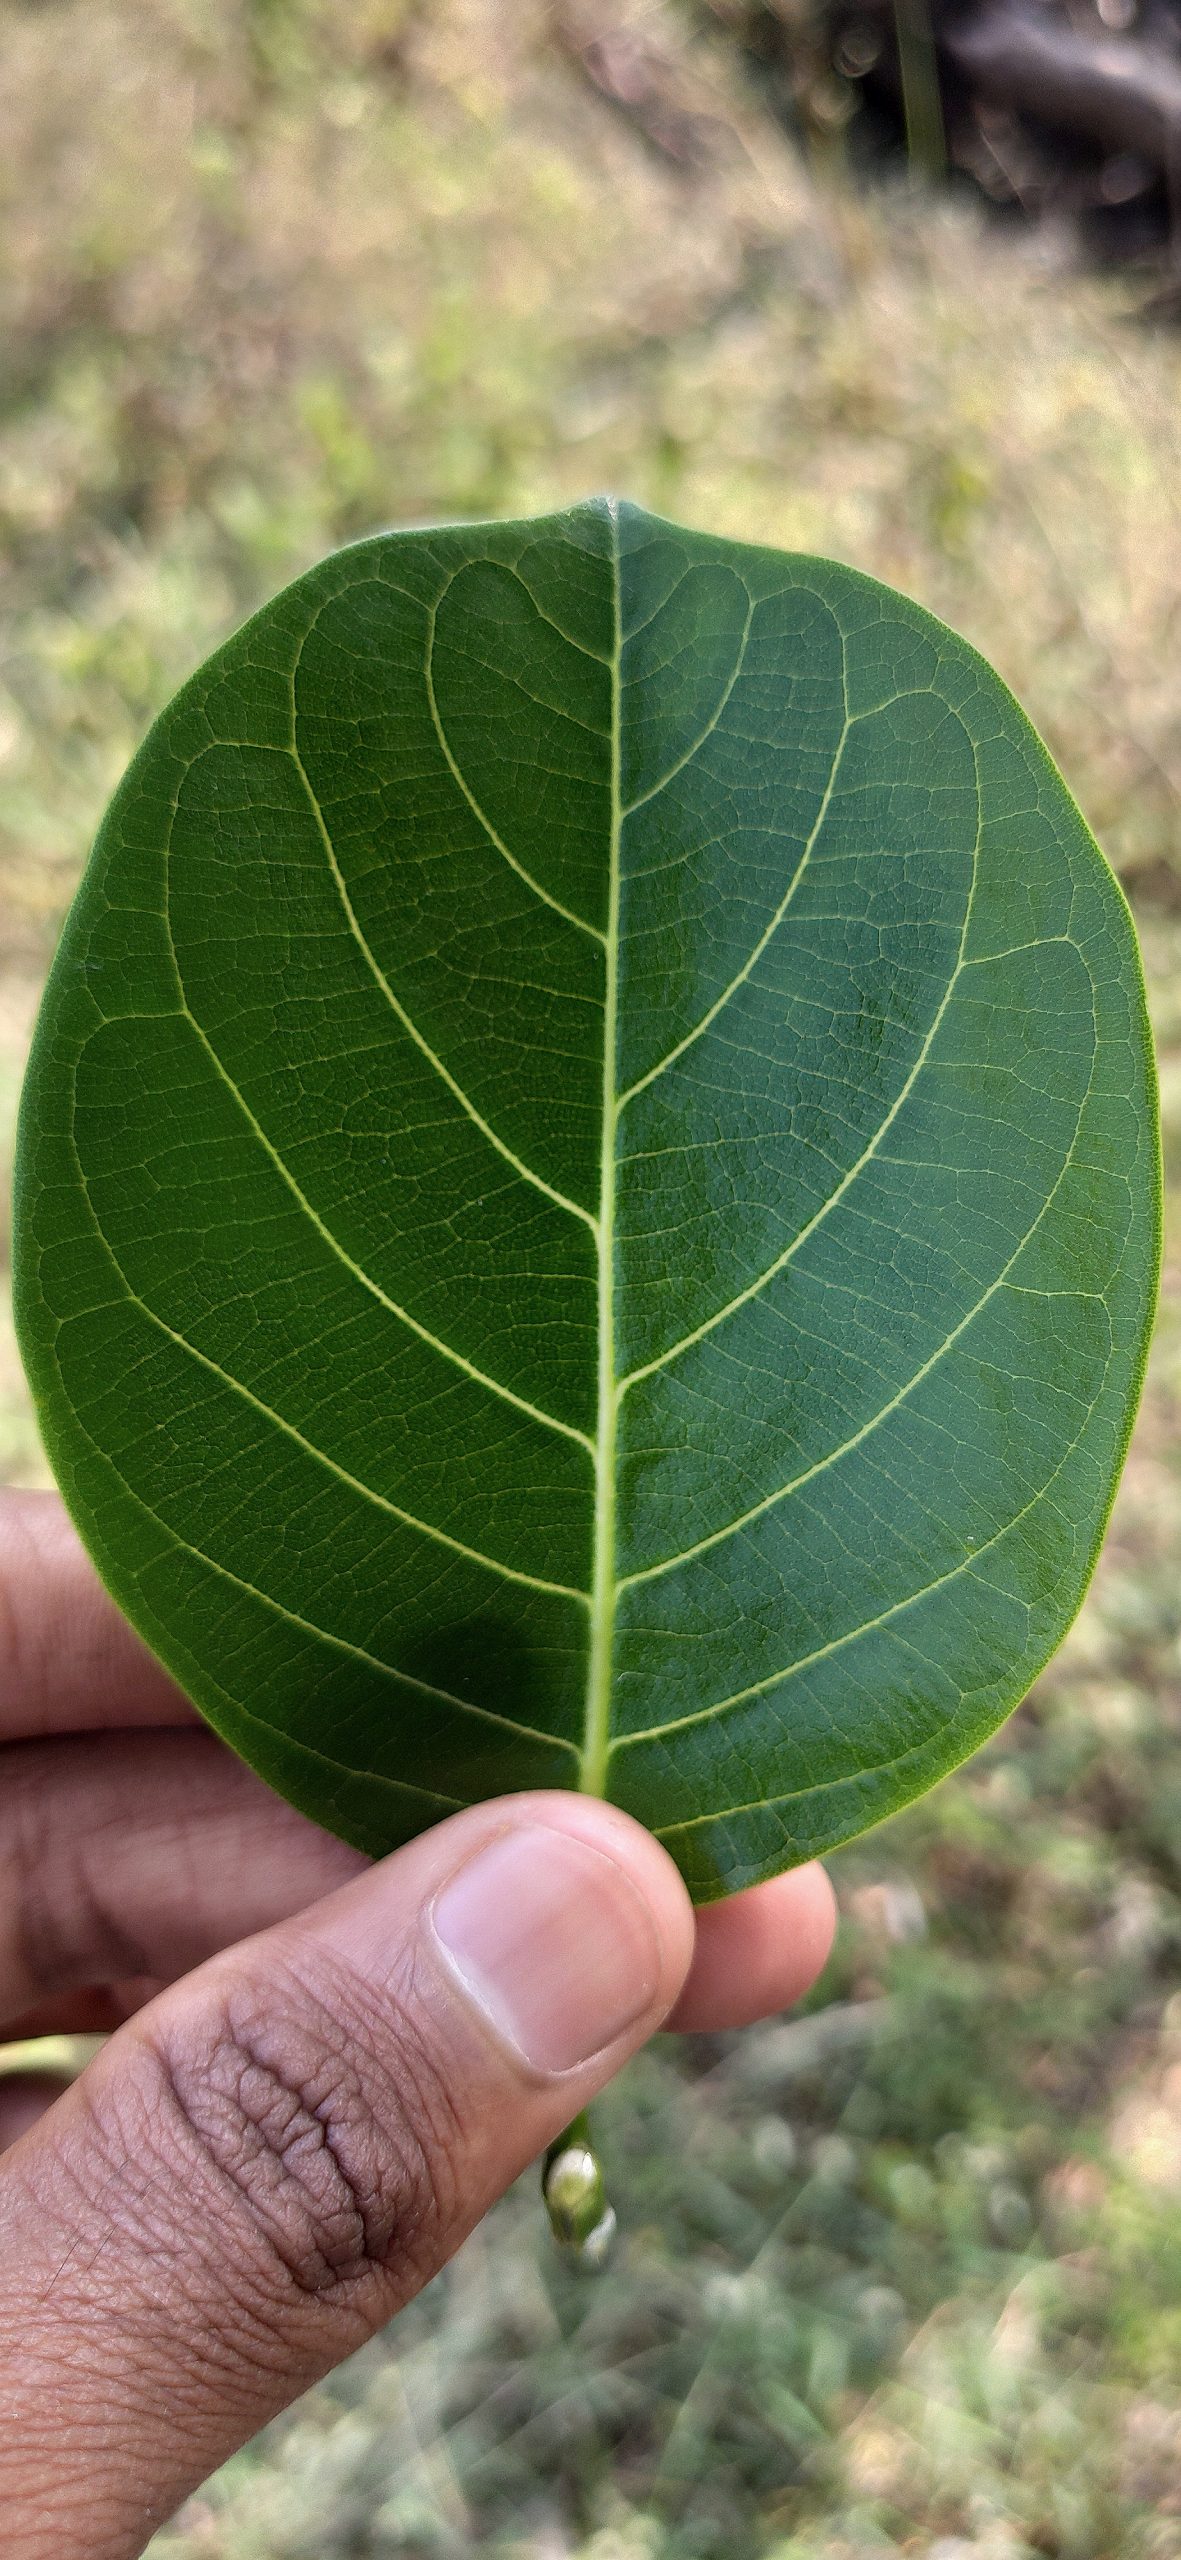 A green leaf in hand